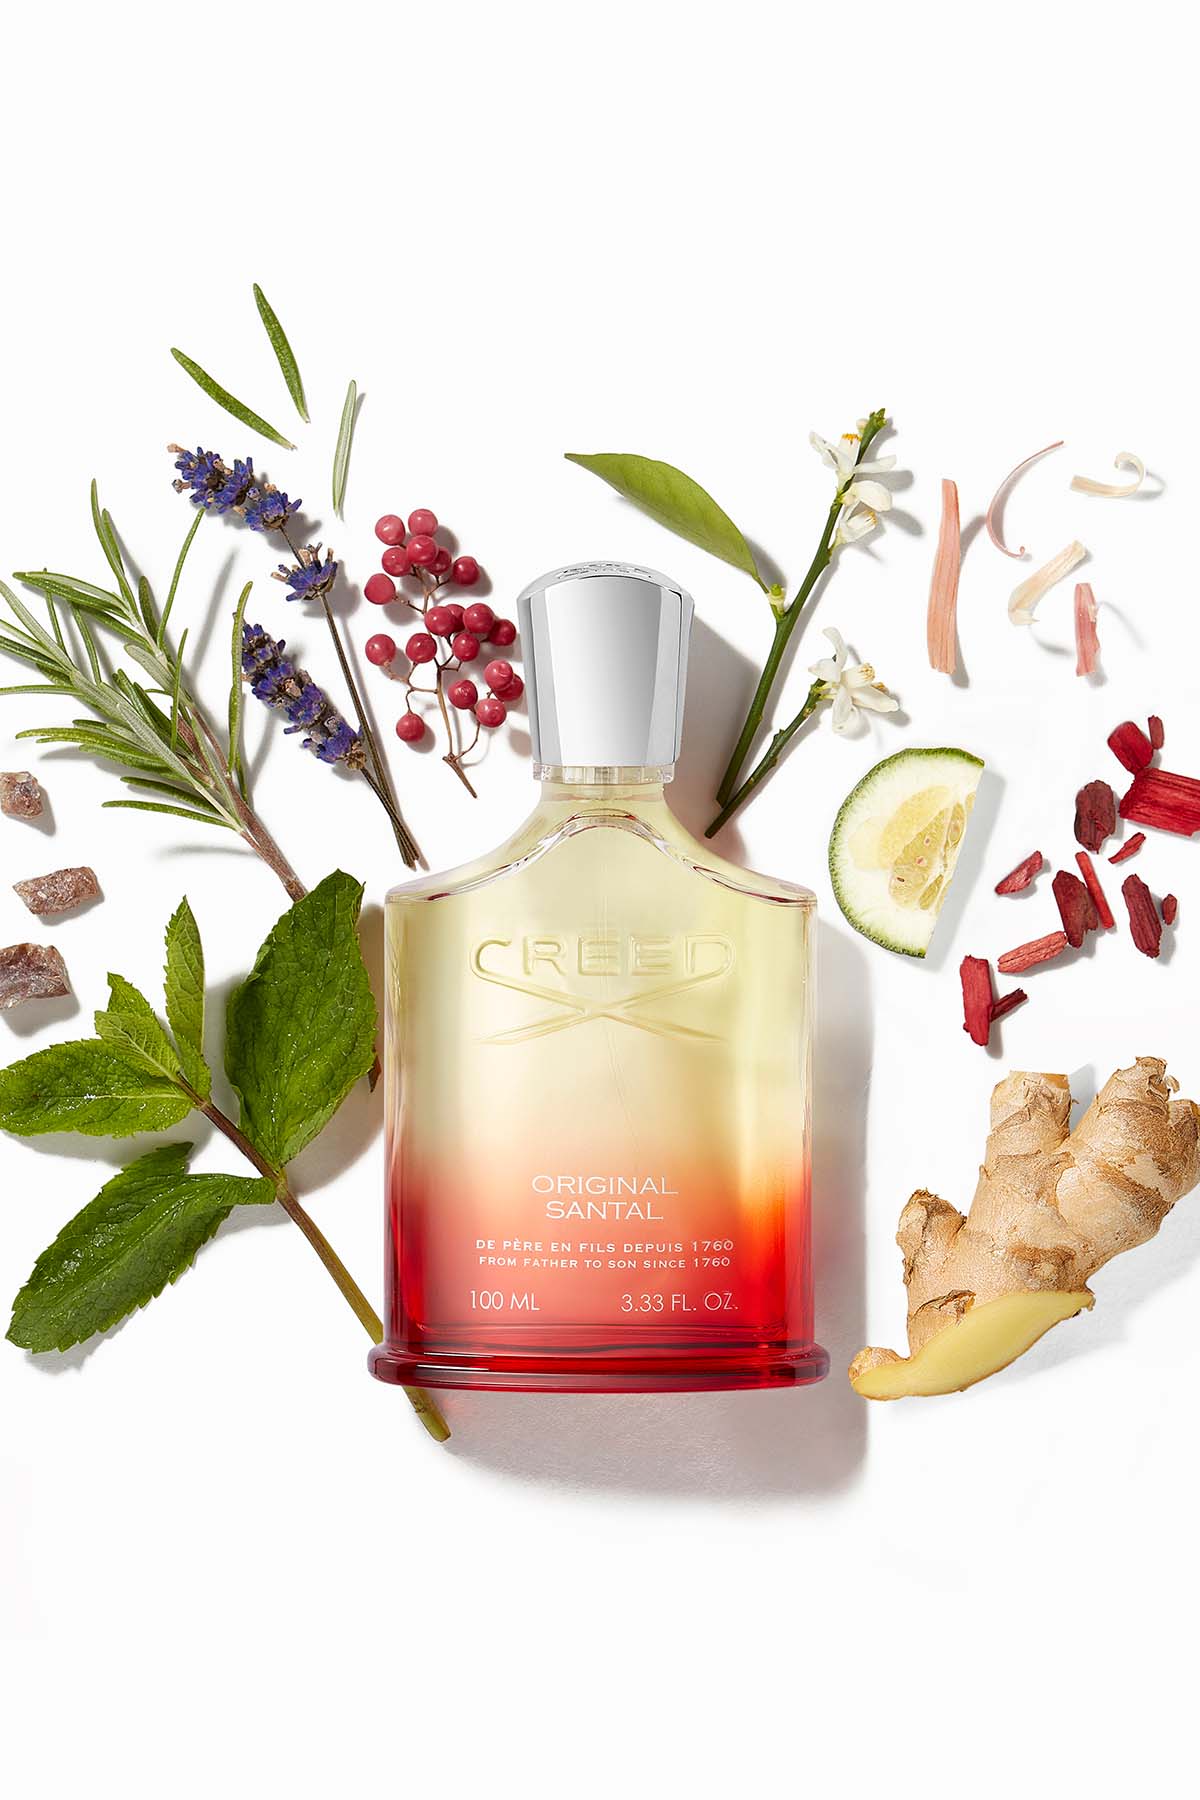 Creed Original Santal Eau de Parfum Ingredients